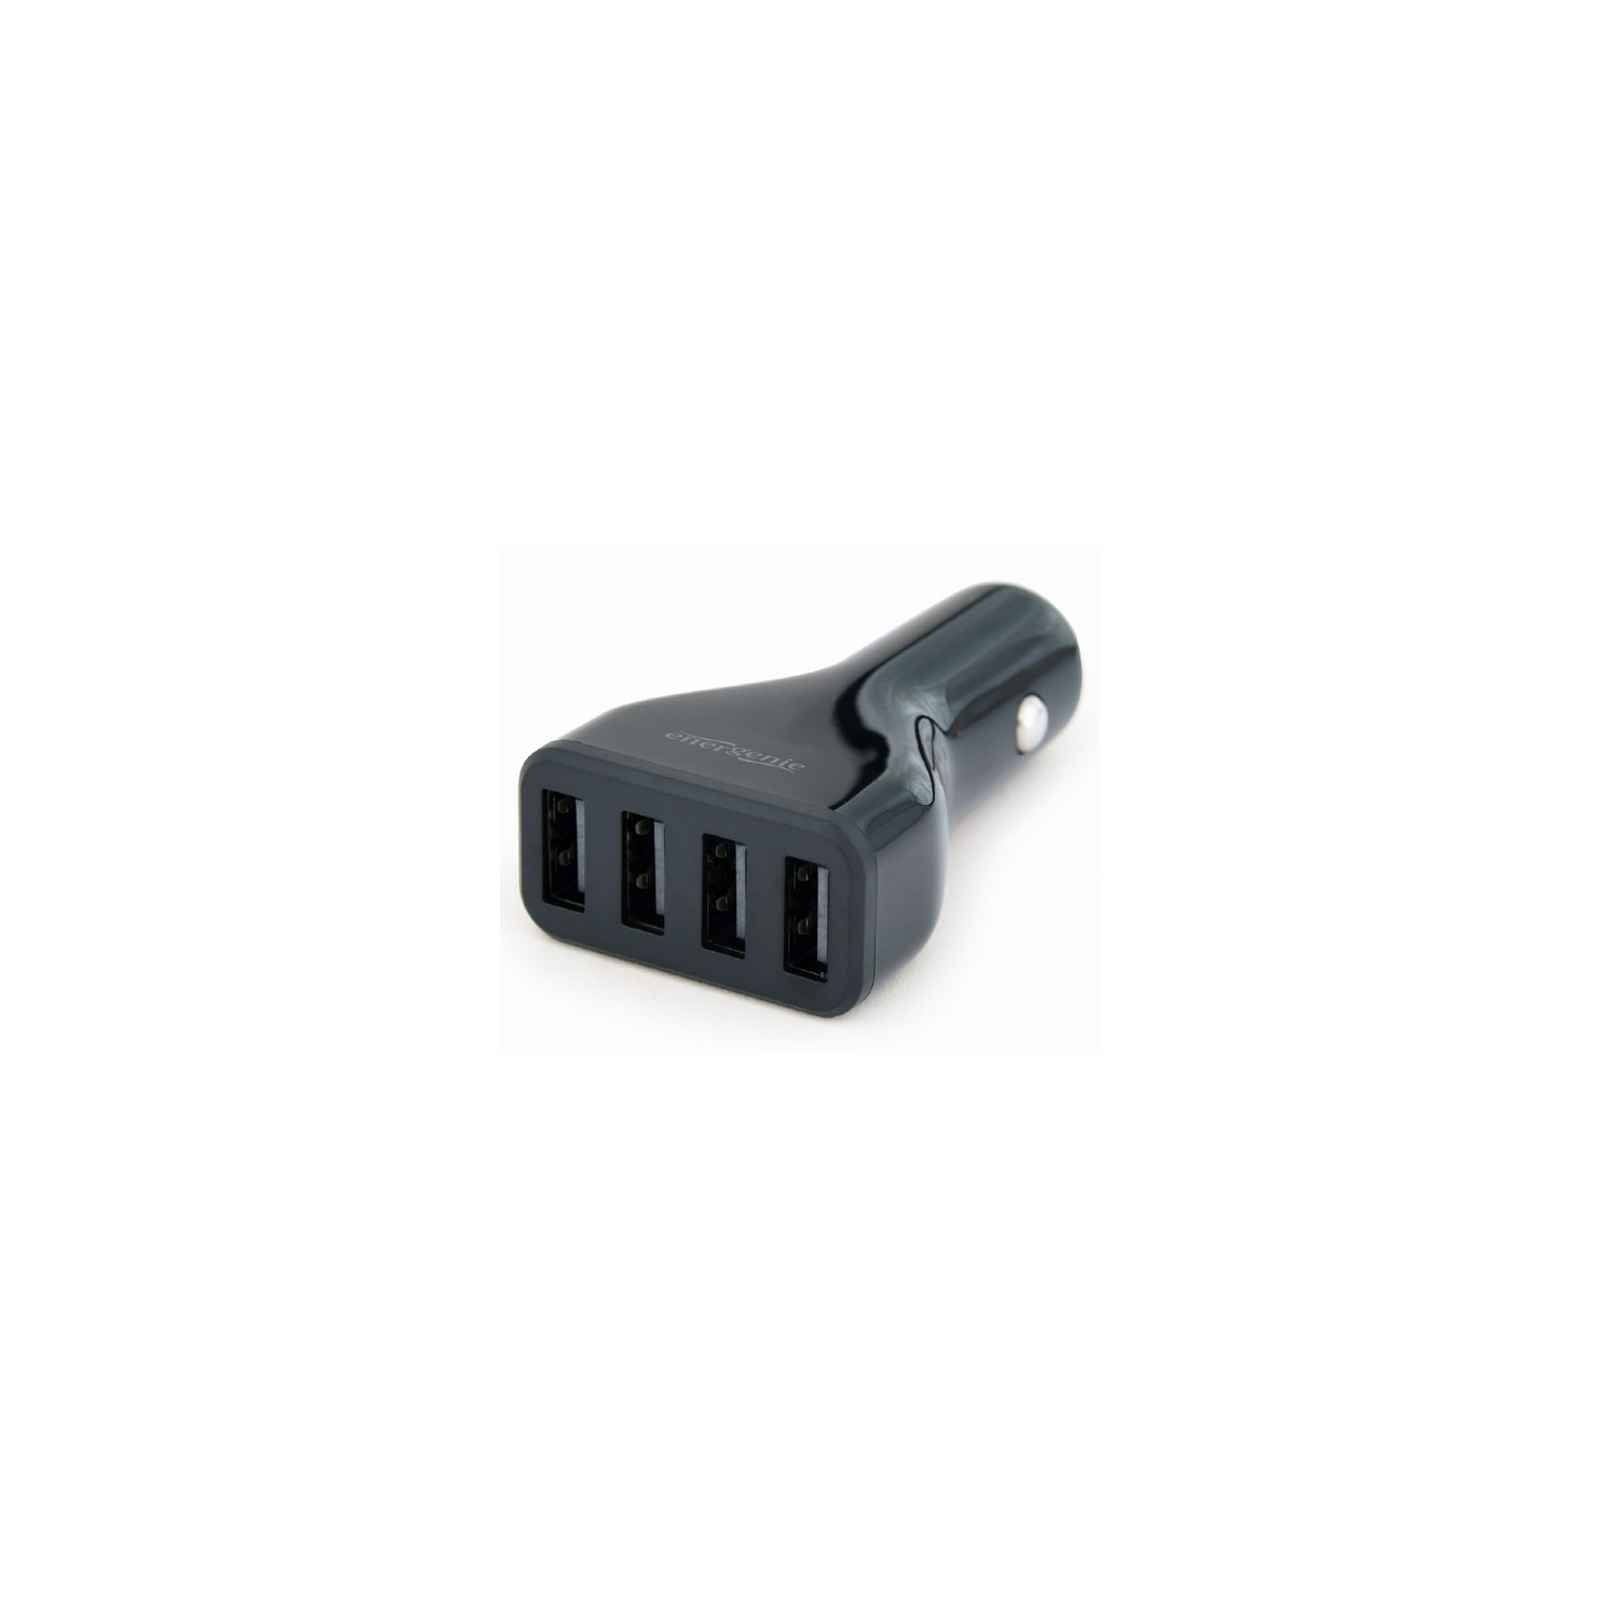 Зарядное устройство EnerGenie USB 4.8A (EG-U4C4A-CAR-01)